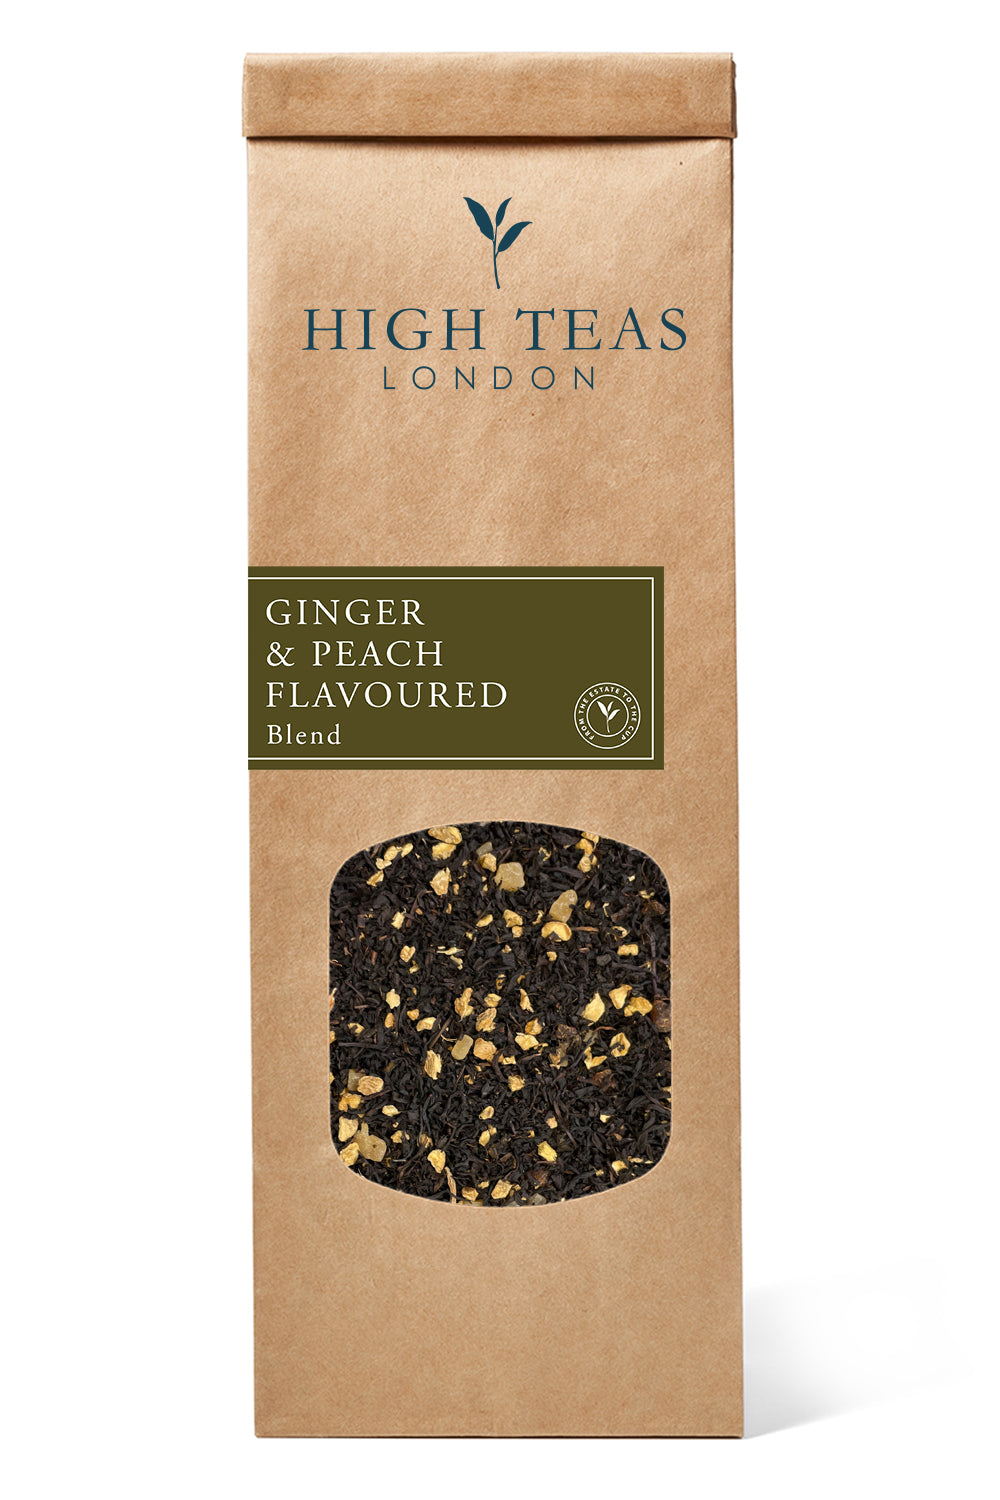 Ginger & Peach flavoured black tea-50g-Loose Leaf Tea-High Teas